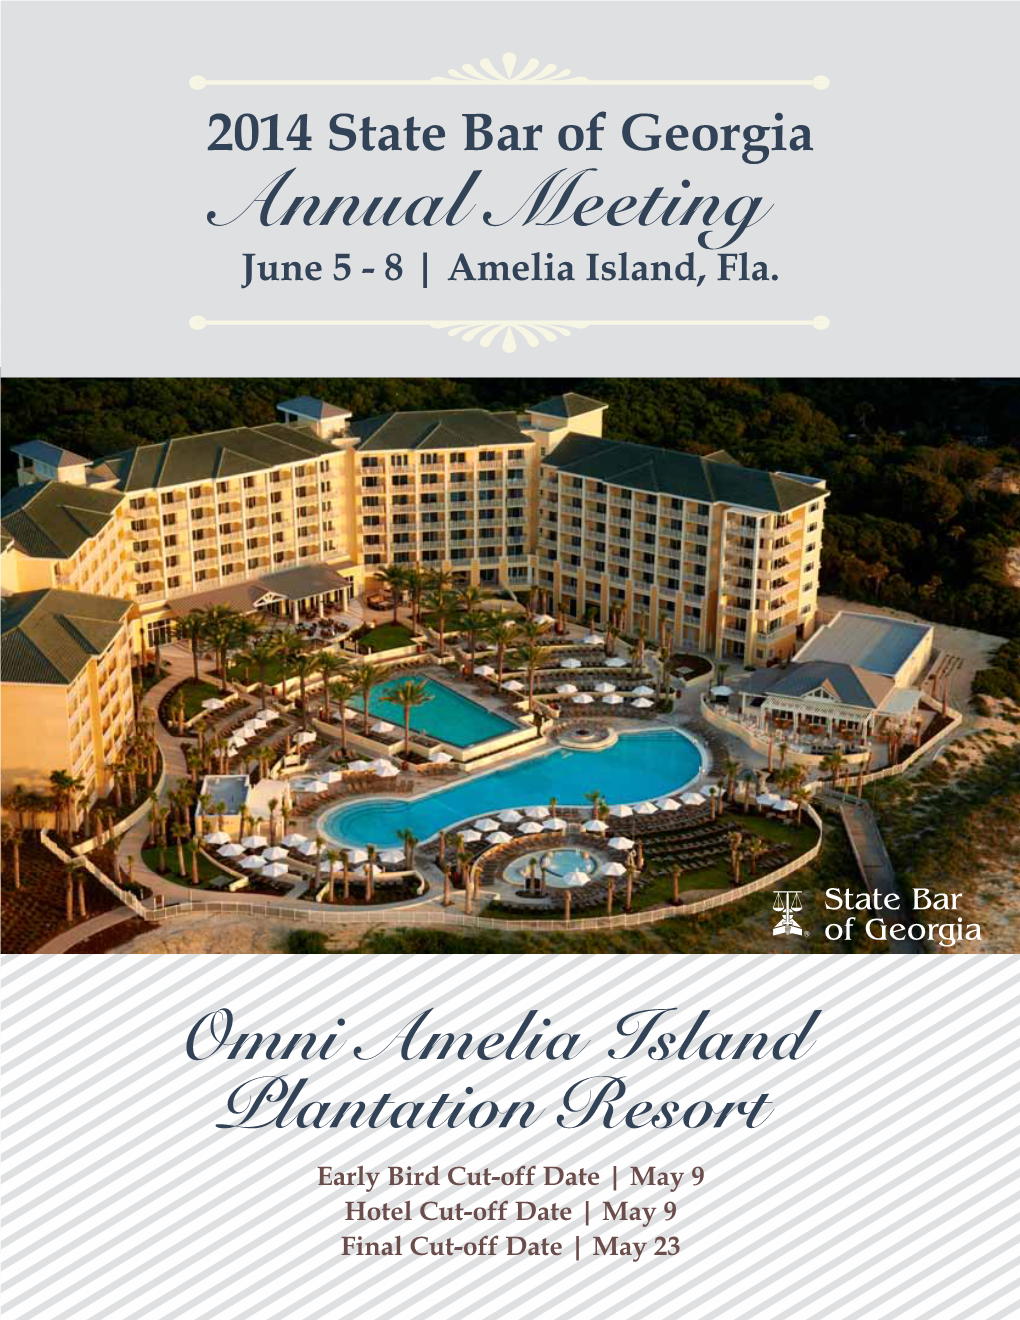 Annual Meeting June 5 - 8 | Amelia Island, Fla.Heading